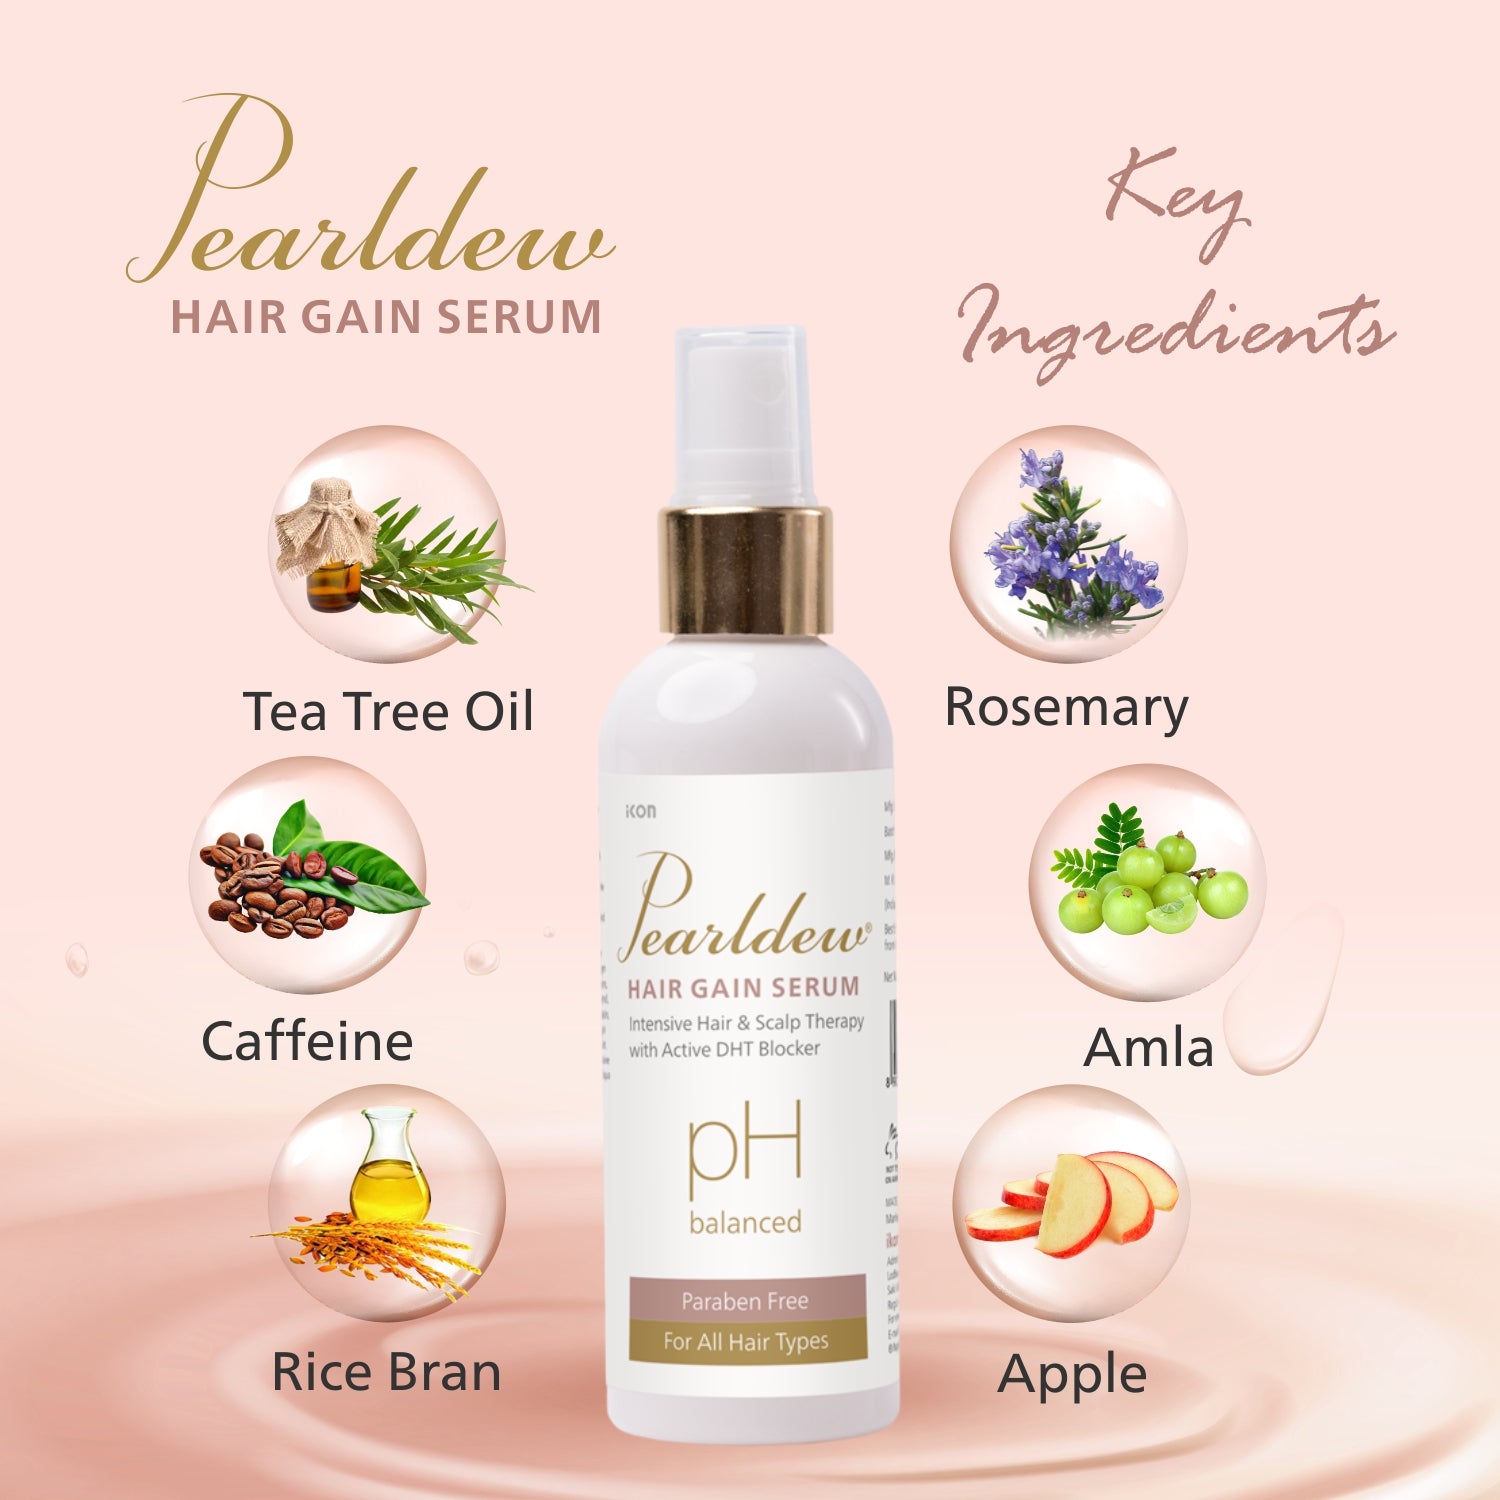 Pearldew Hair Gain Serum (100 ml)